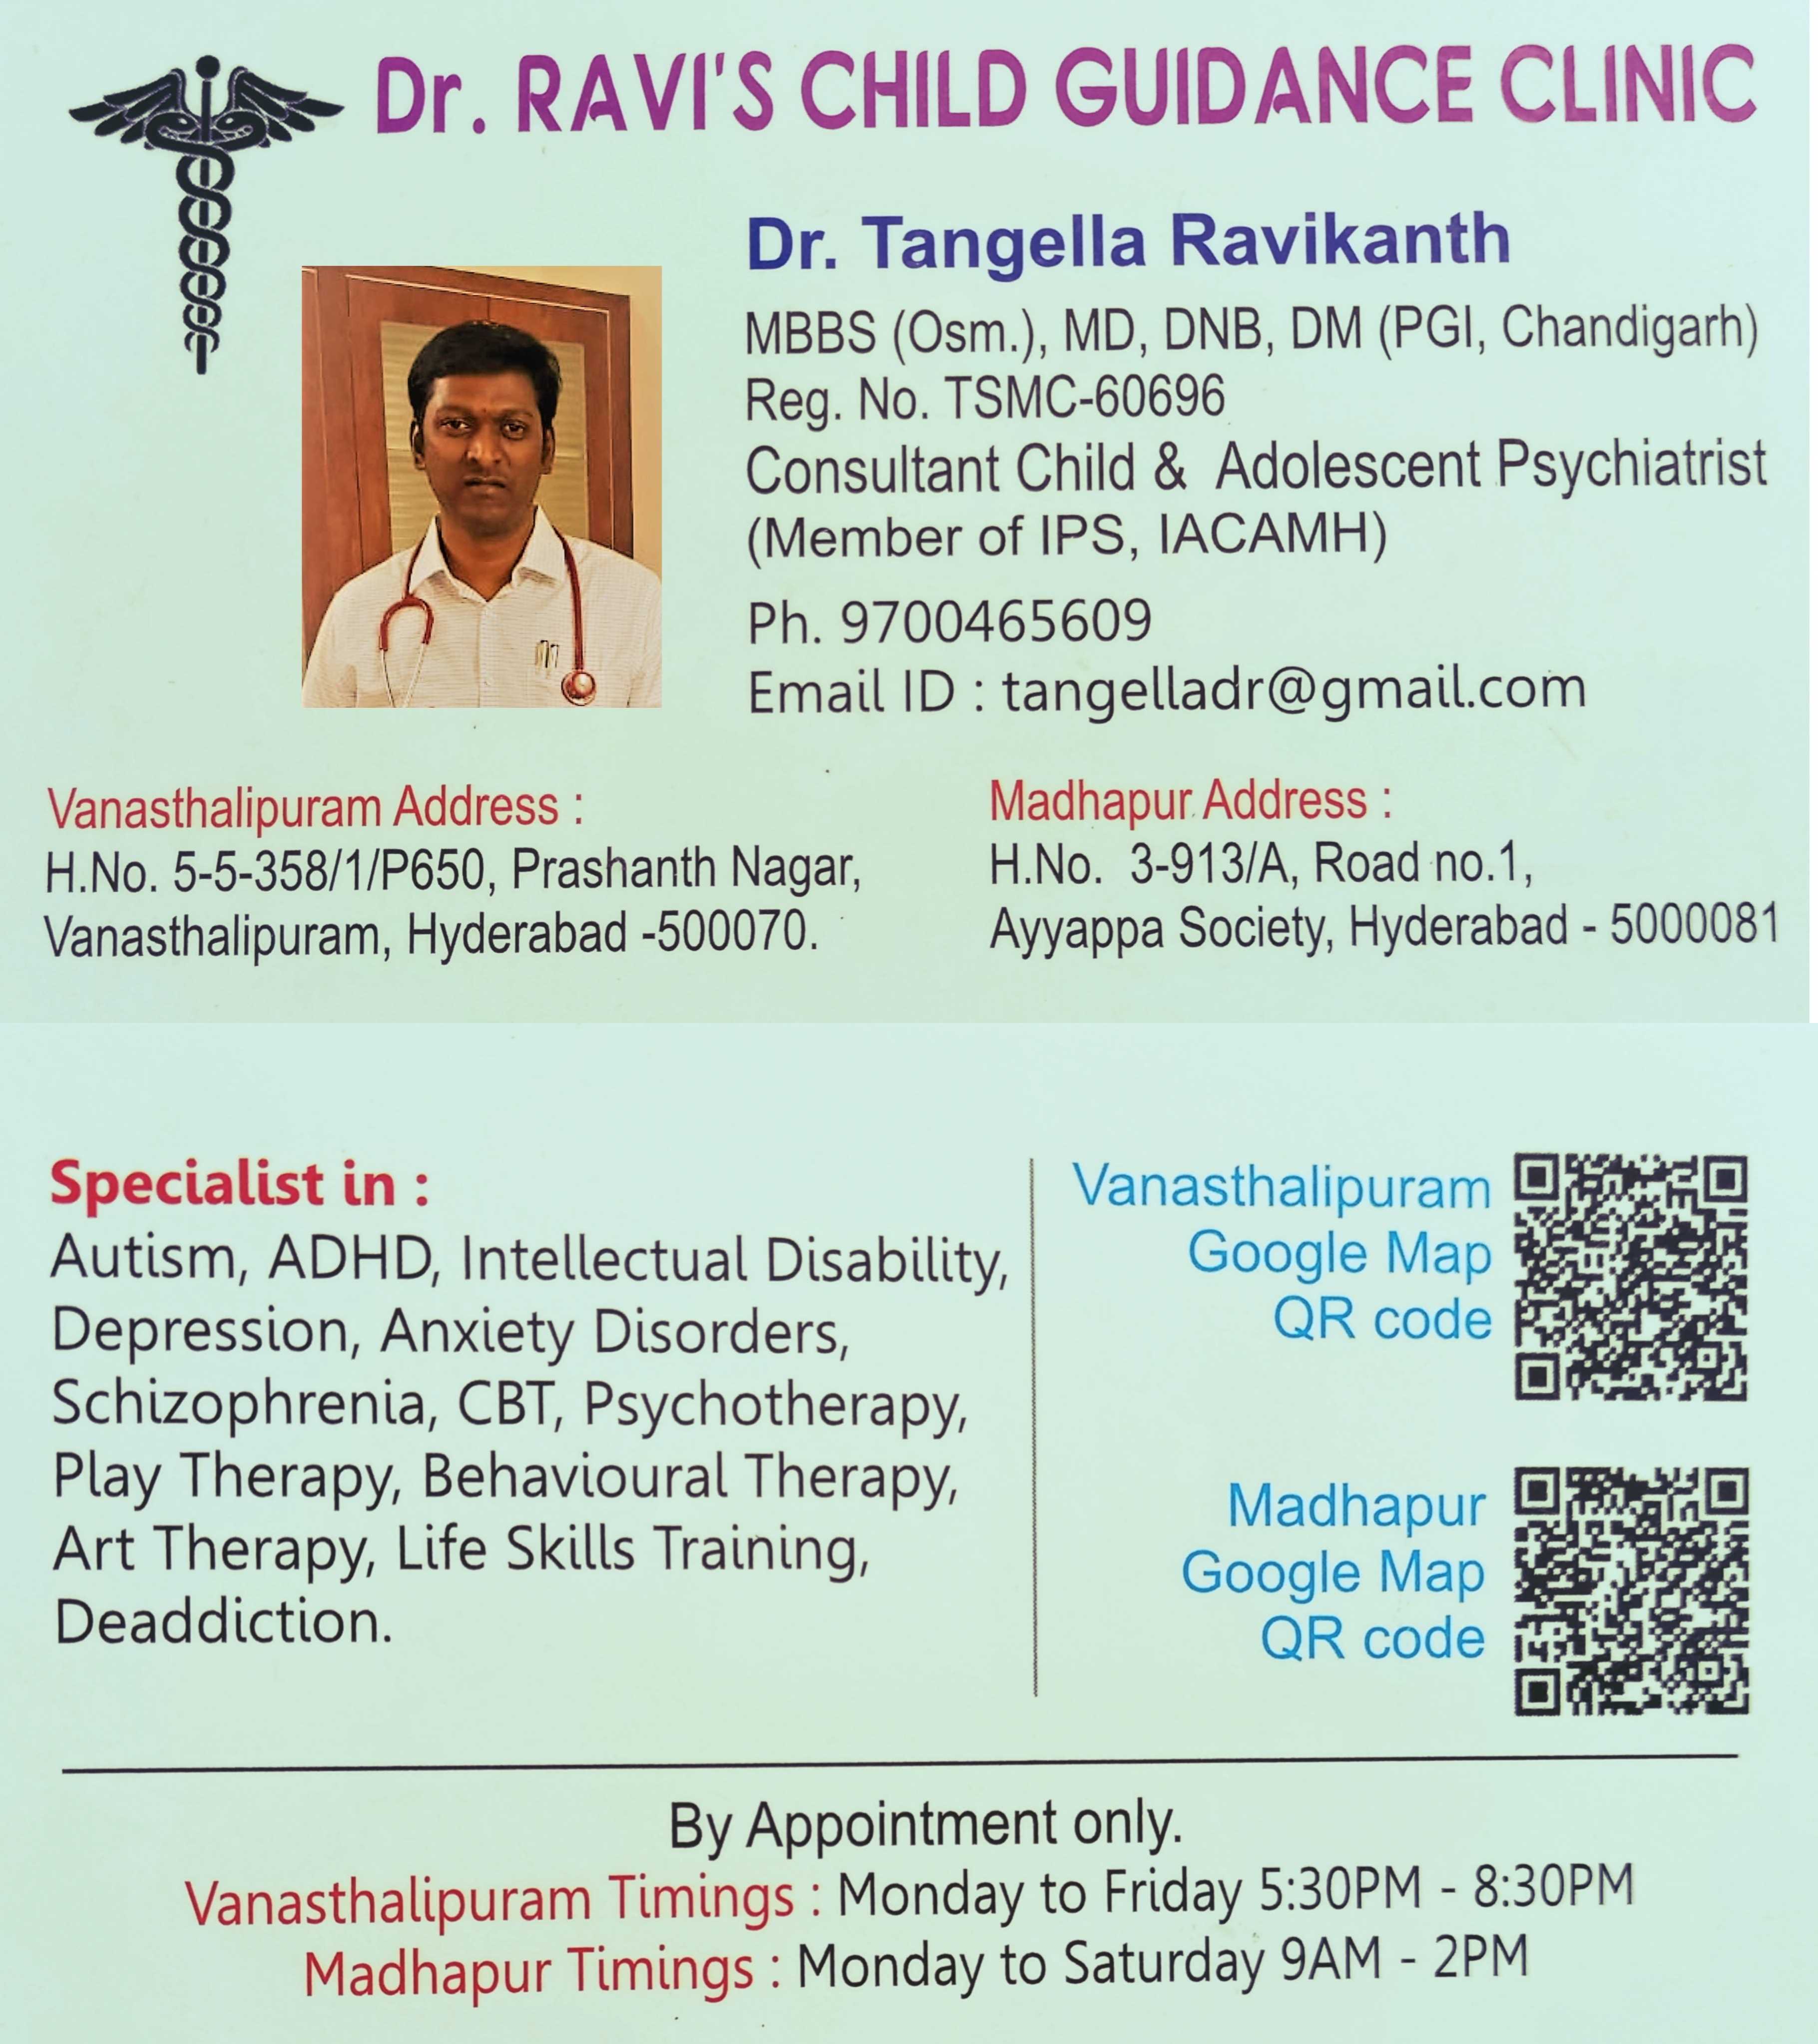 Dr. Ravi's Child Guidance Clinic, Madhapur